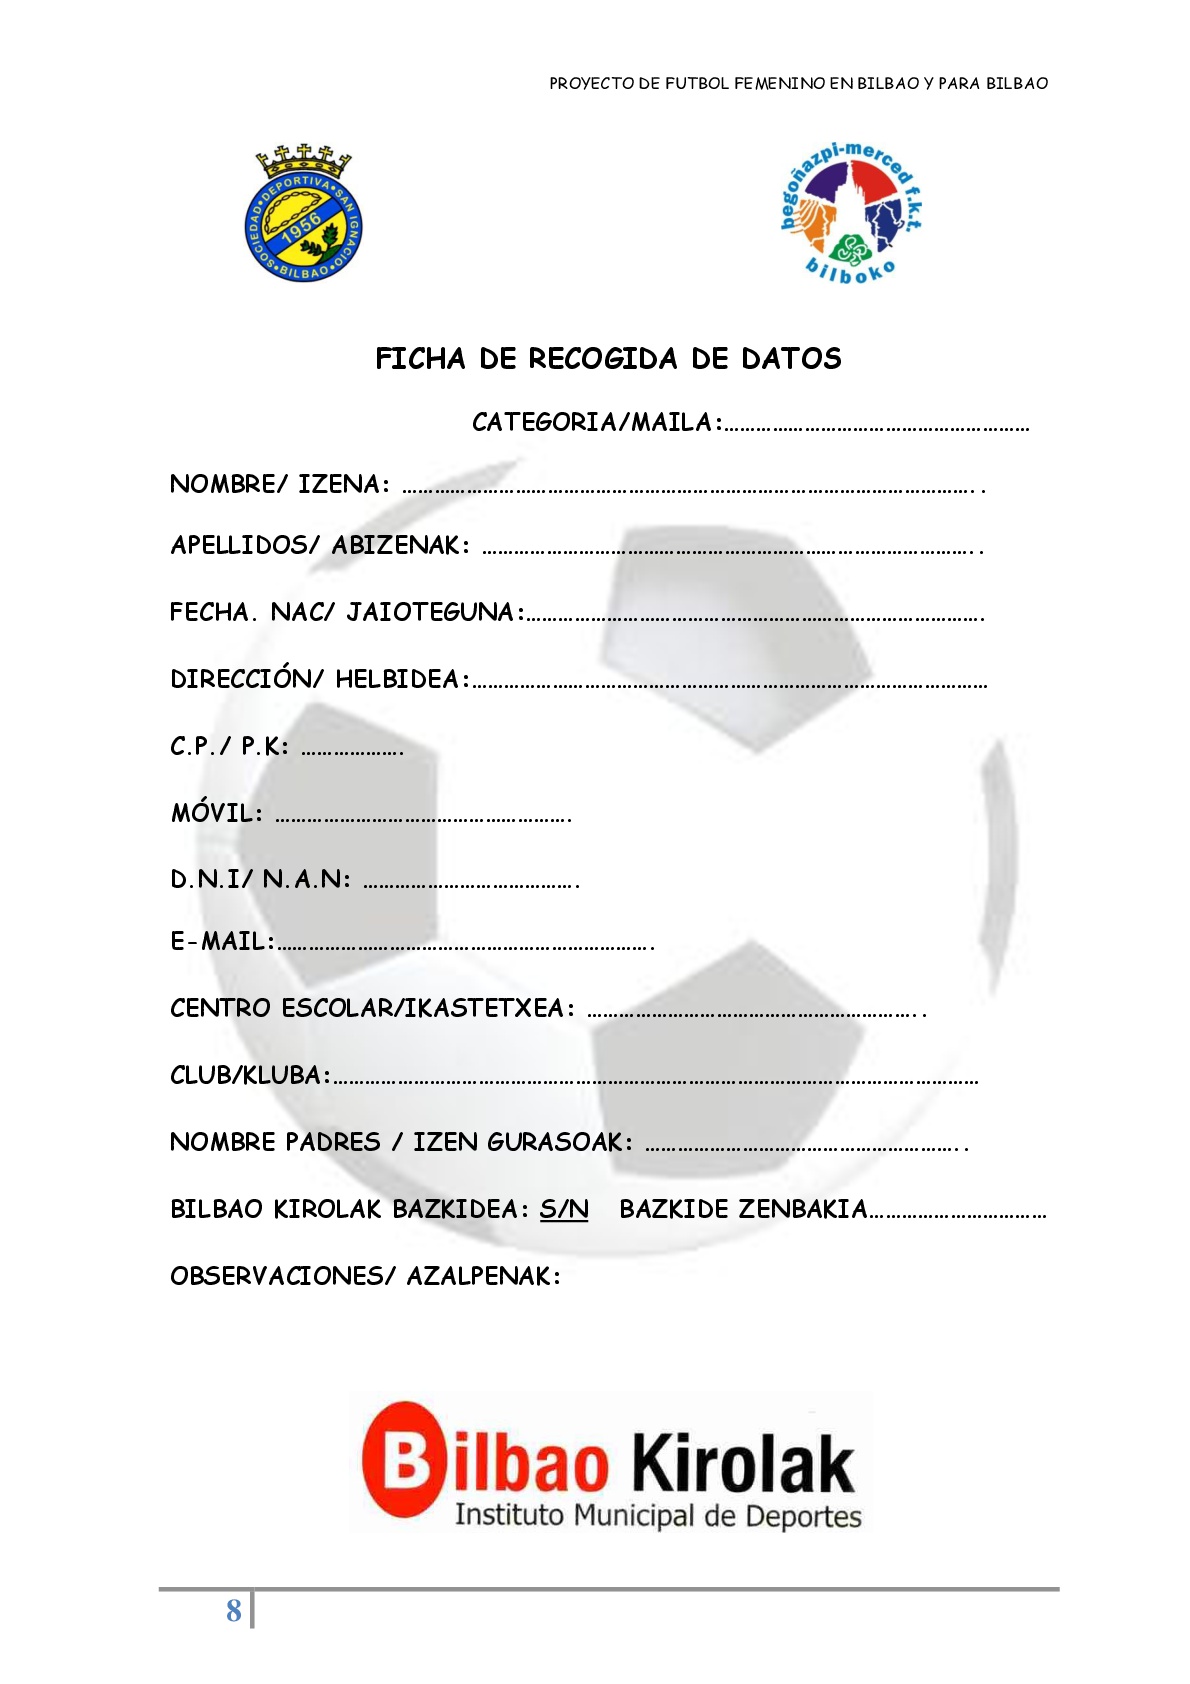 proyecto-futbol-femenino-05-ficha-008